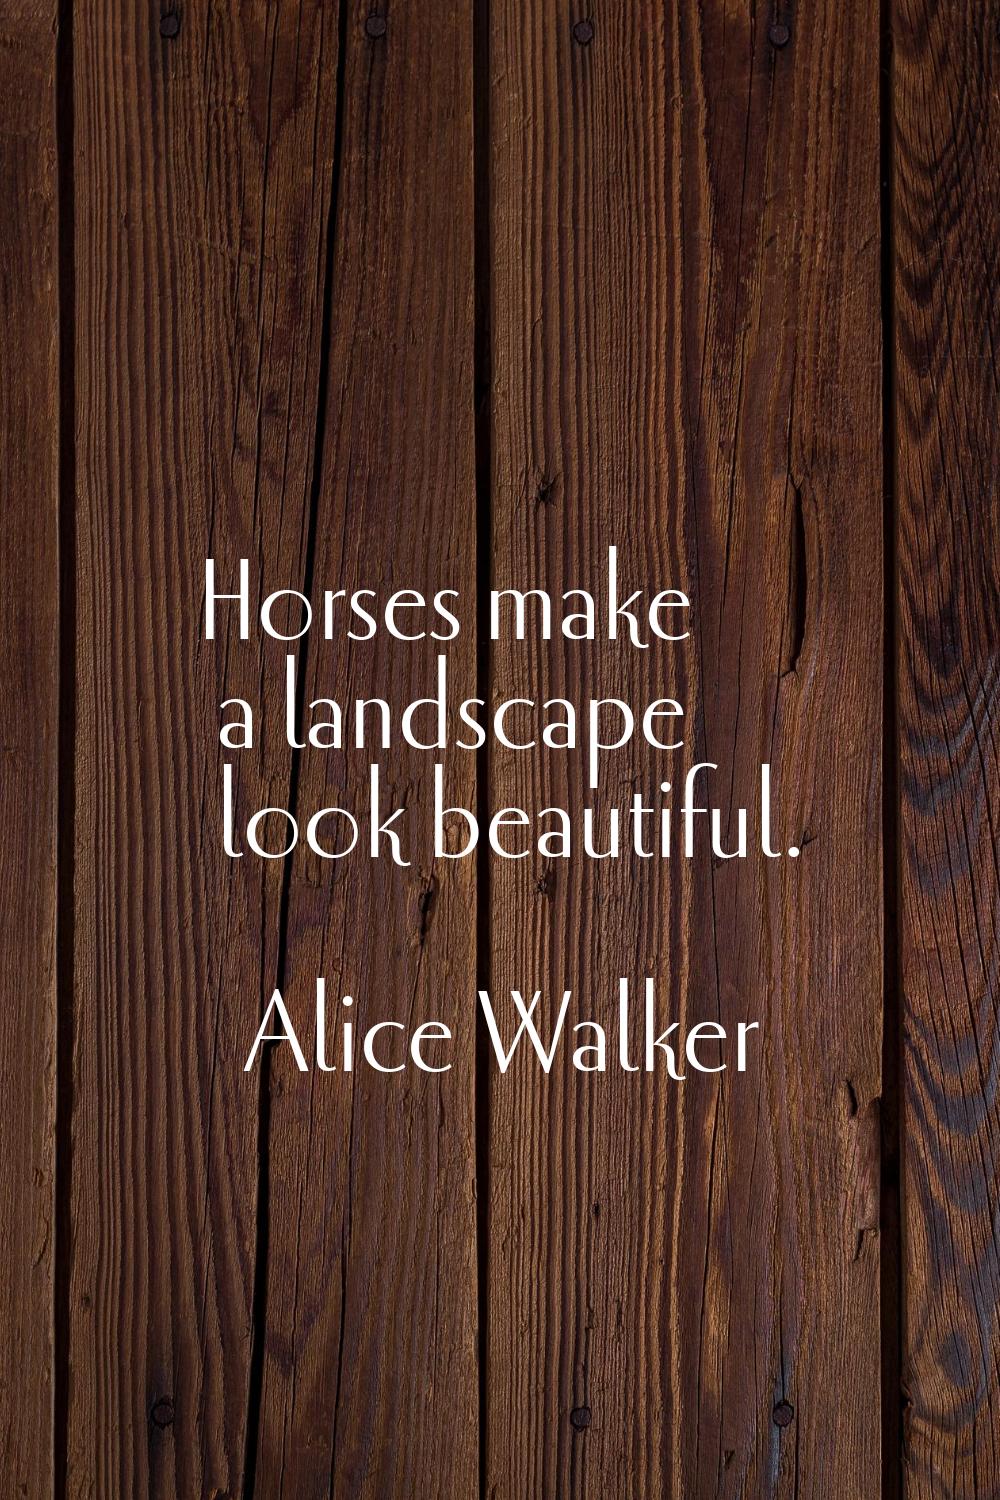 Horses make a landscape look beautiful.